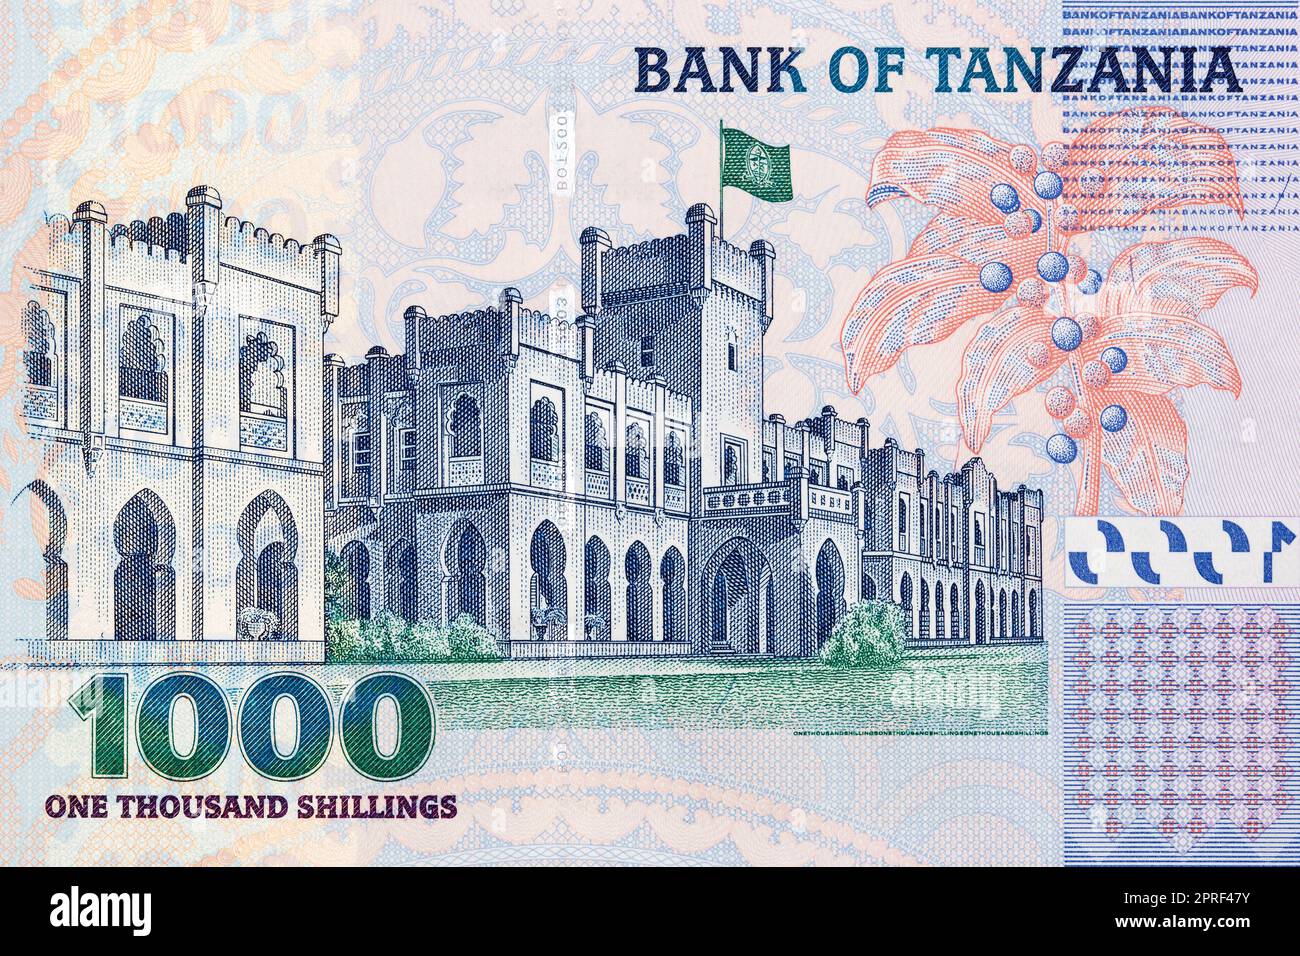 Statehouse from Tanzanian money Stock Photo